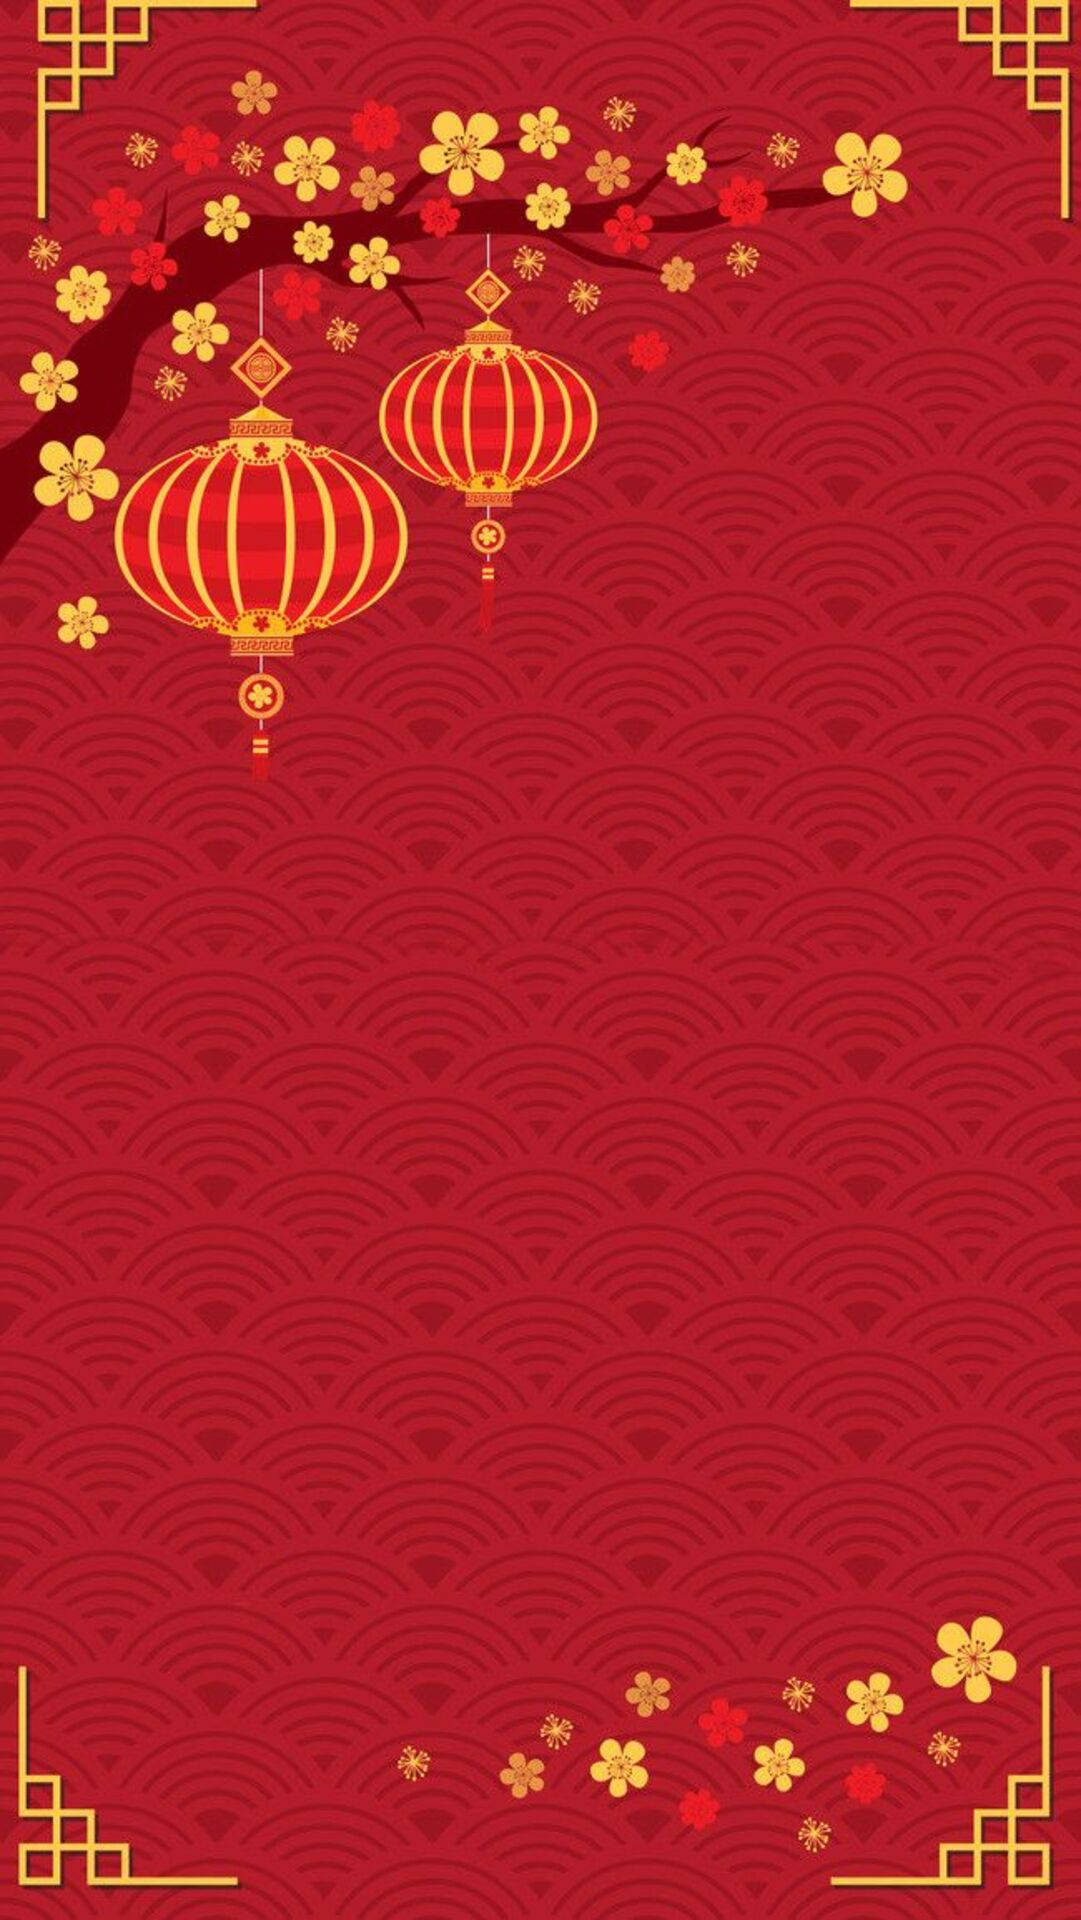 Chinese New Year Lanterns Wallpaper